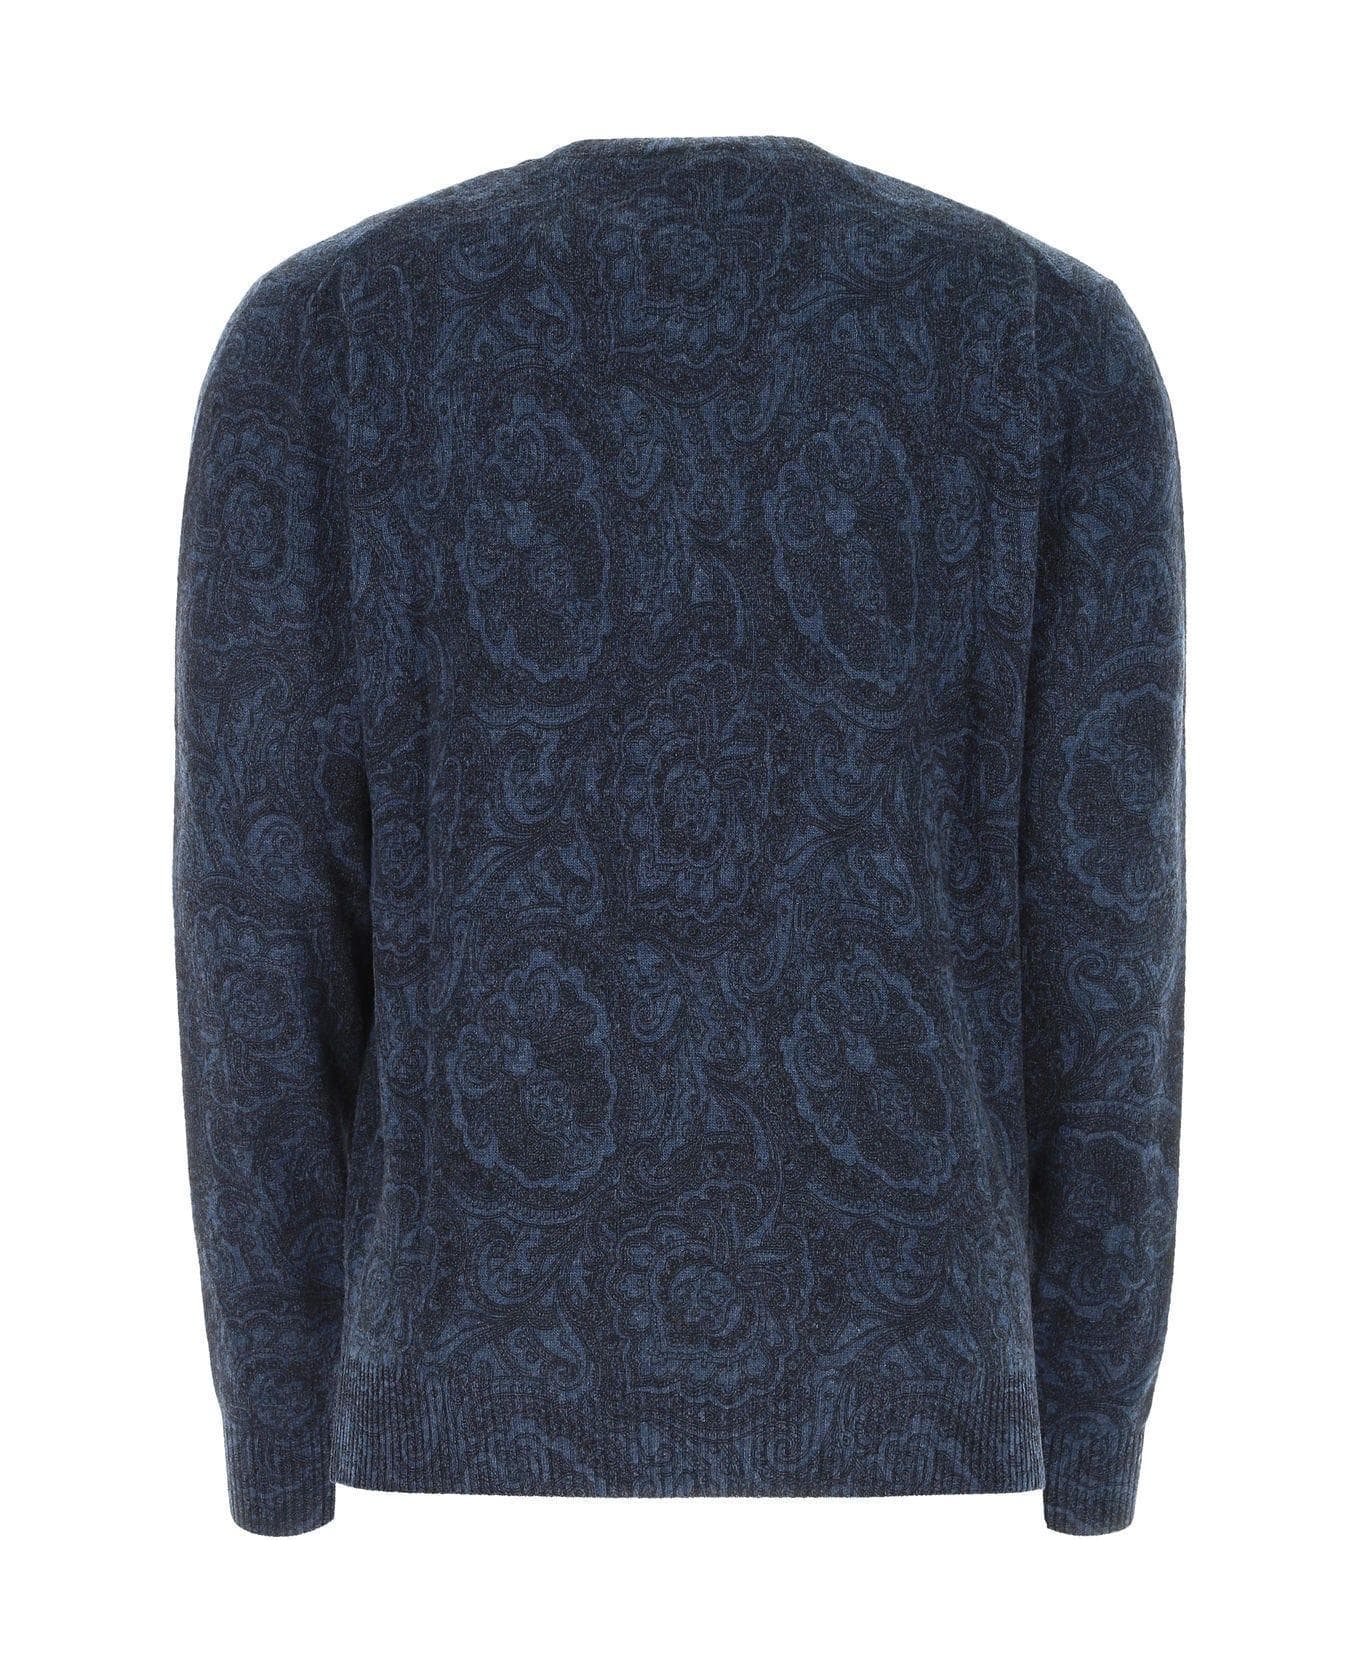 Etro Embroidered Cotton Sweater - Blu